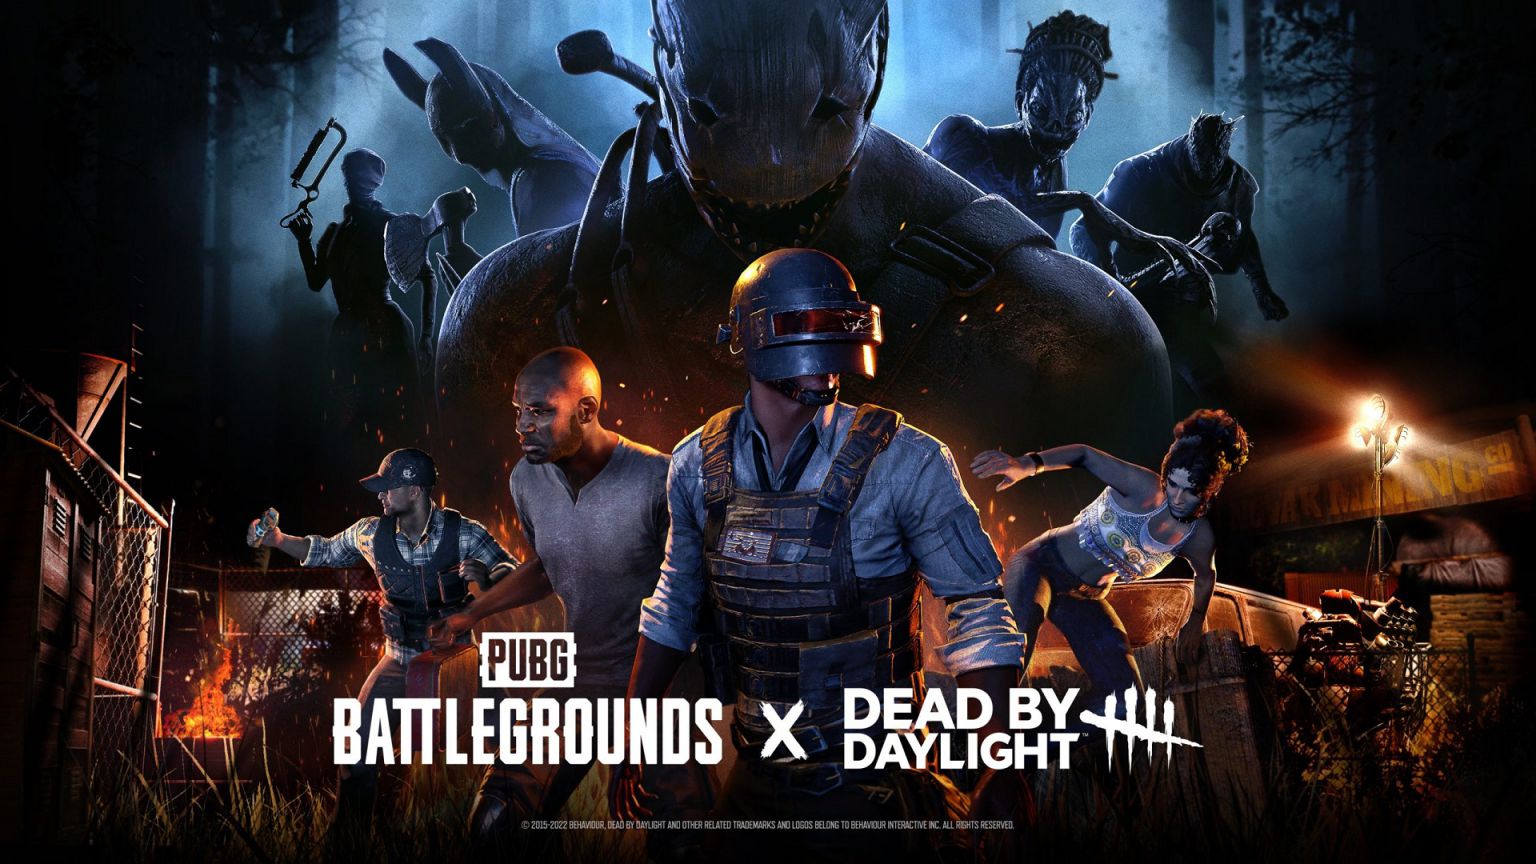 PUBG Battlegrounds x Dead by Daylight collaboration